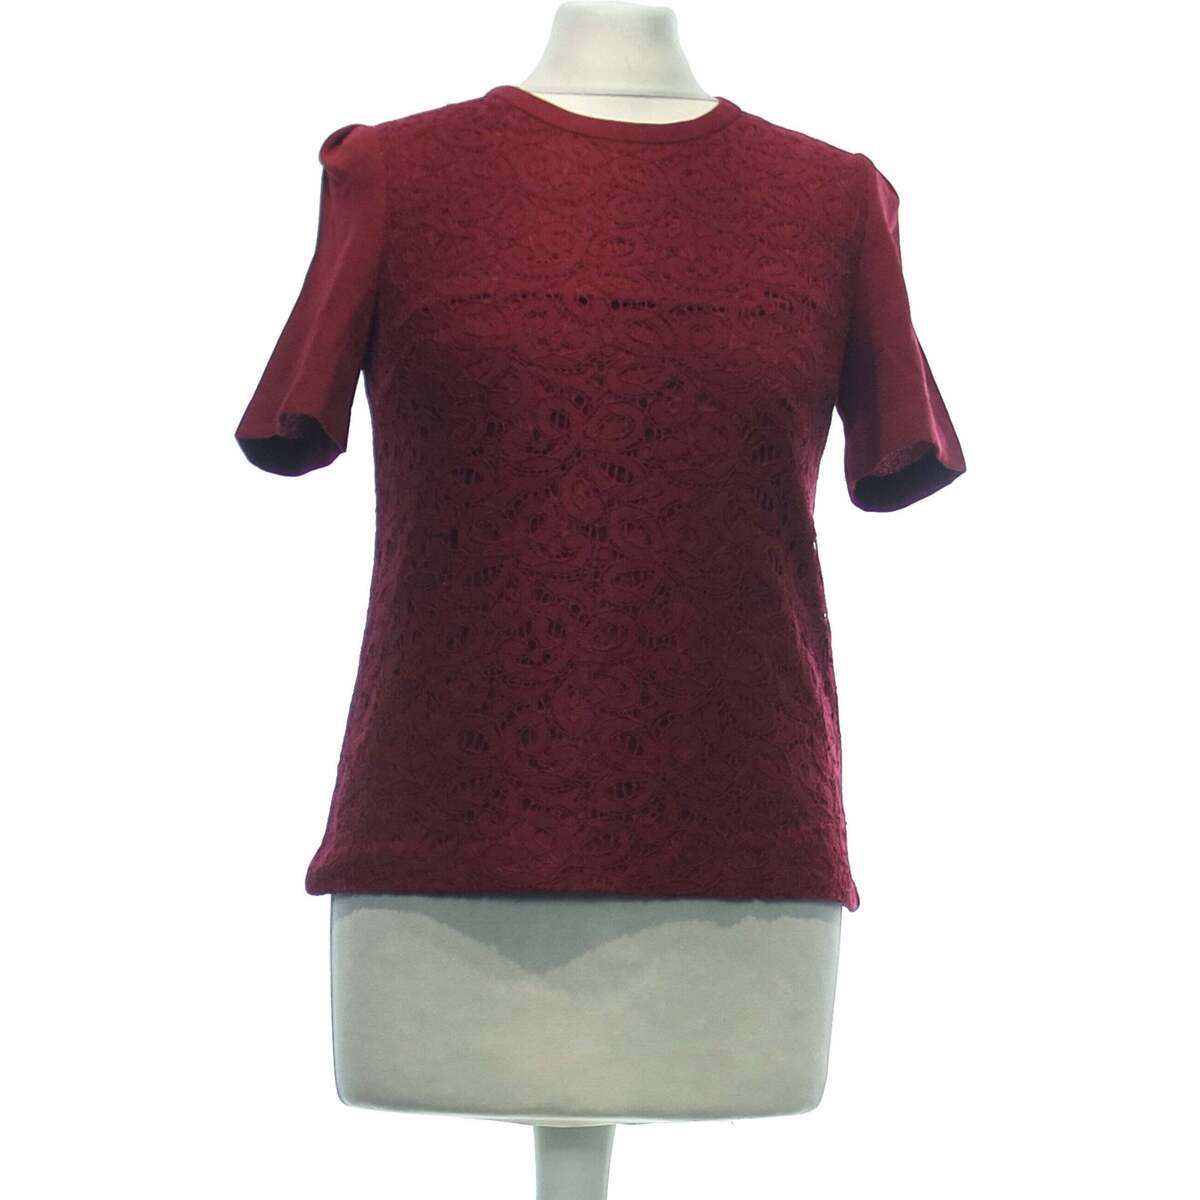 Vêtements Femme Short Sleeve Name Buddha T-shirt 34 - T0 - XS Rouge